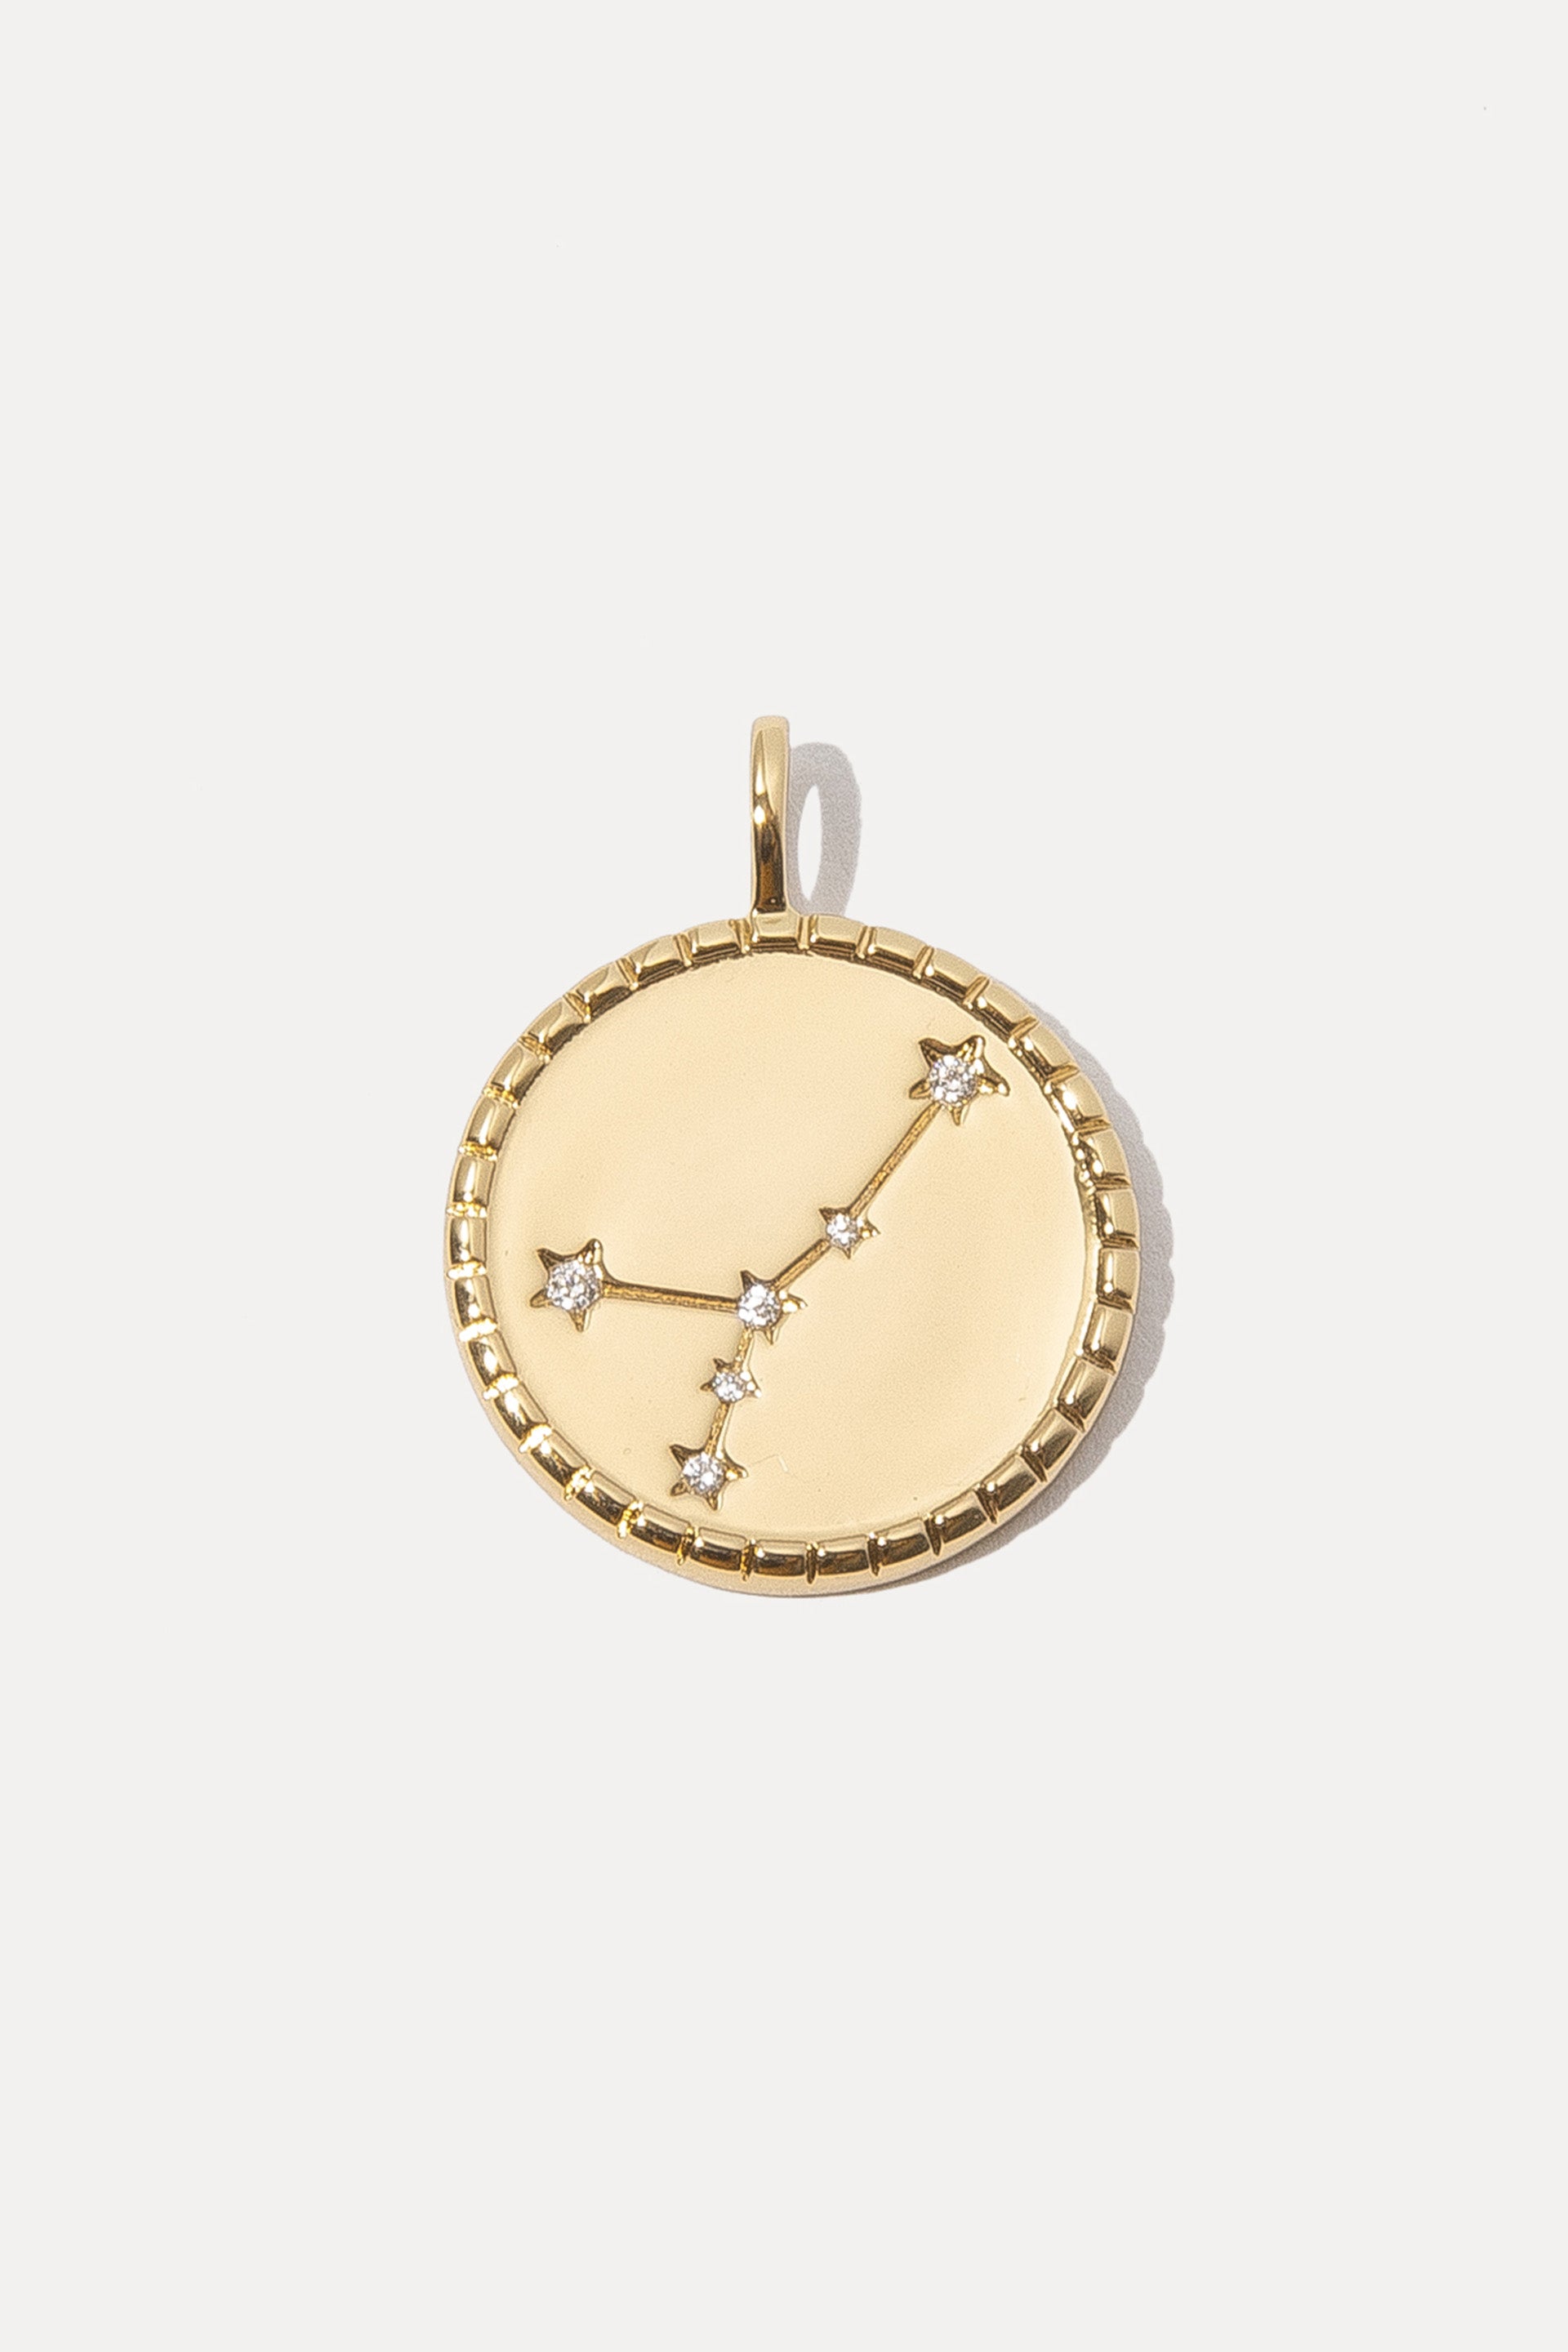 Louis Vuitton Louis in the Sky Zodiac Pendant Necklace - Gold-Tone